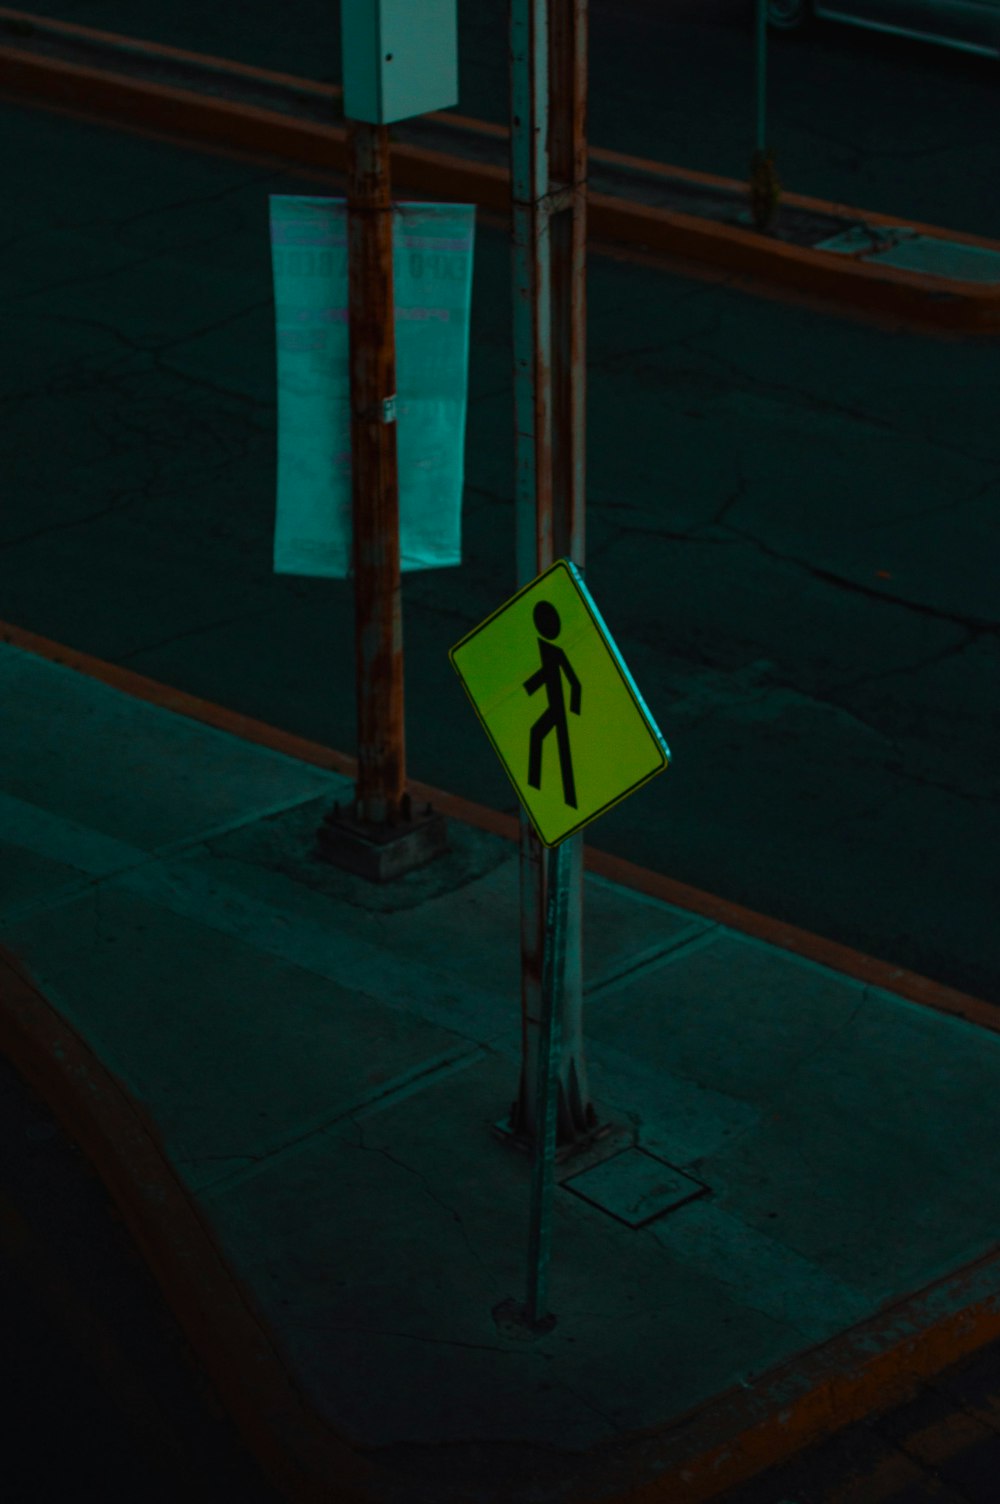 a pedestrian crossing sign on a city street